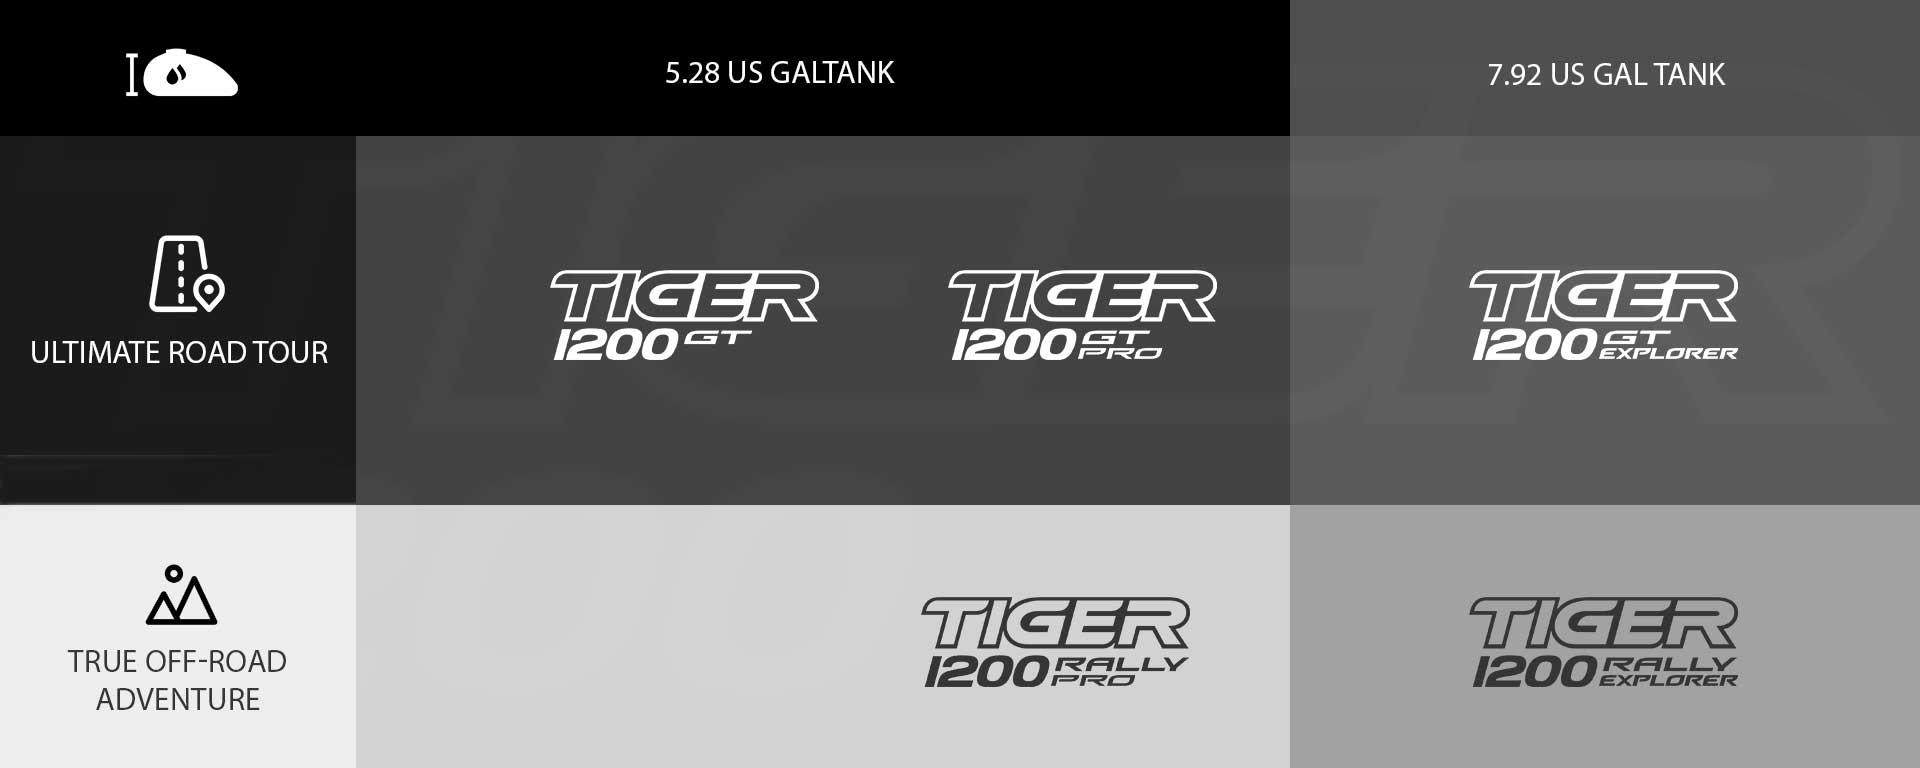 2022 Triumph Tiger 1200 range infographic